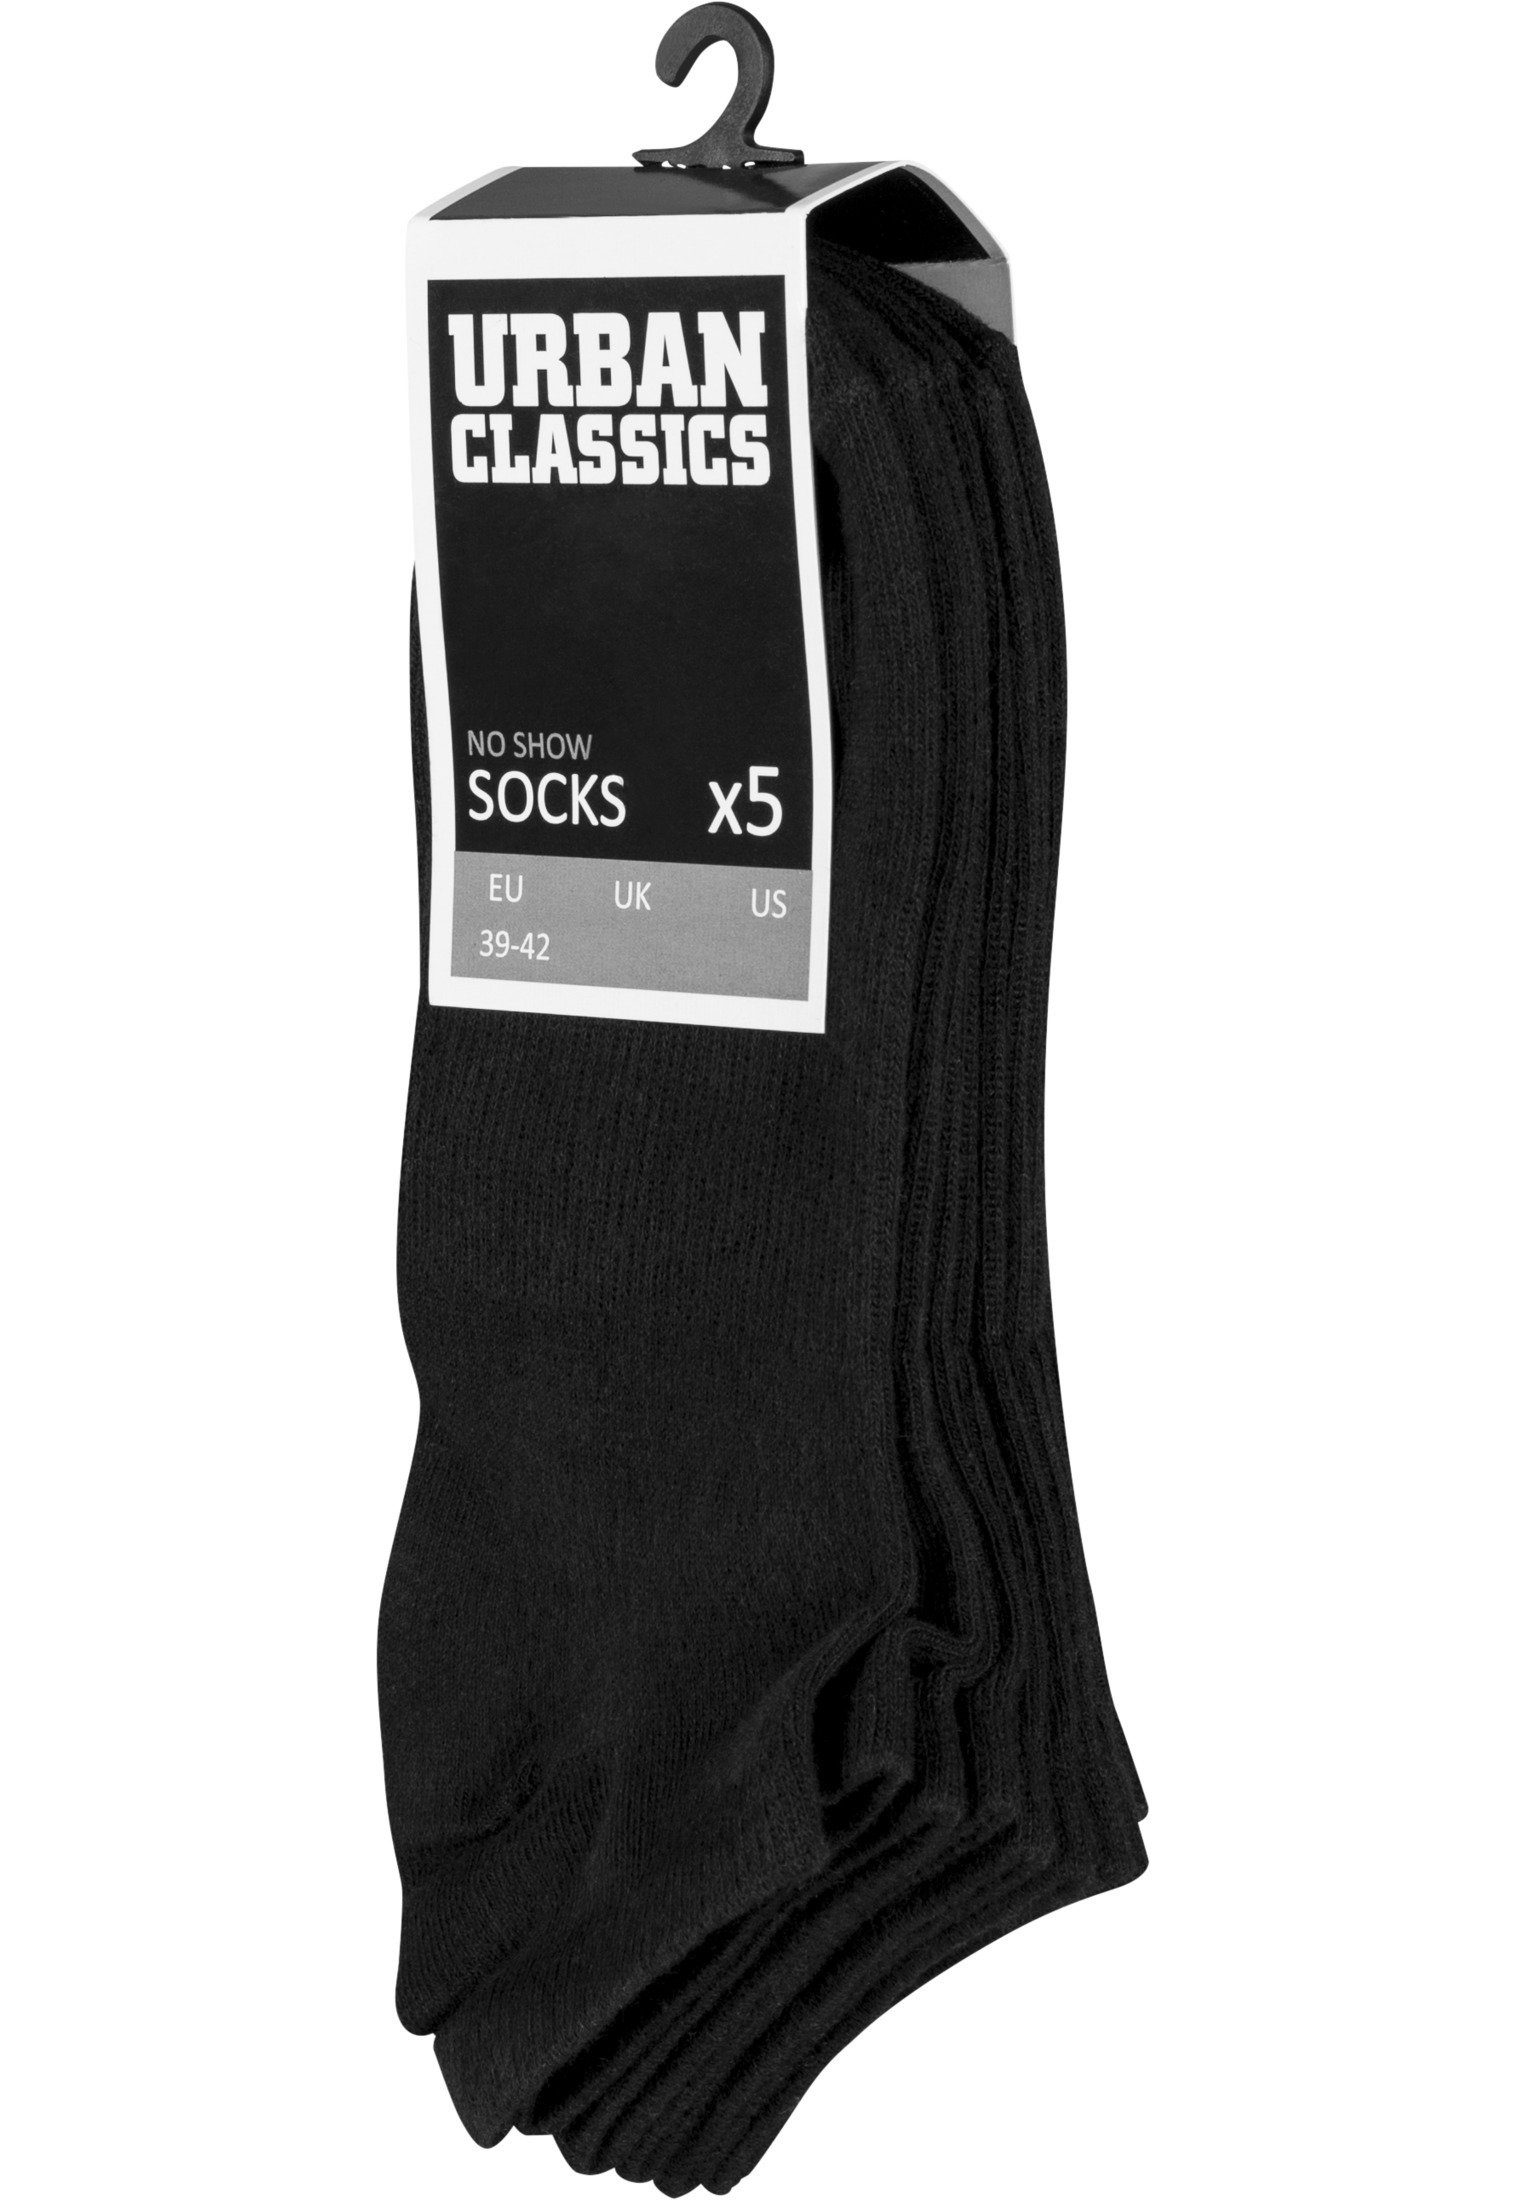 URBAN CLASSICS Freizeitsocken Accessoires No Socks (1-Paar) black 5-Pack Show